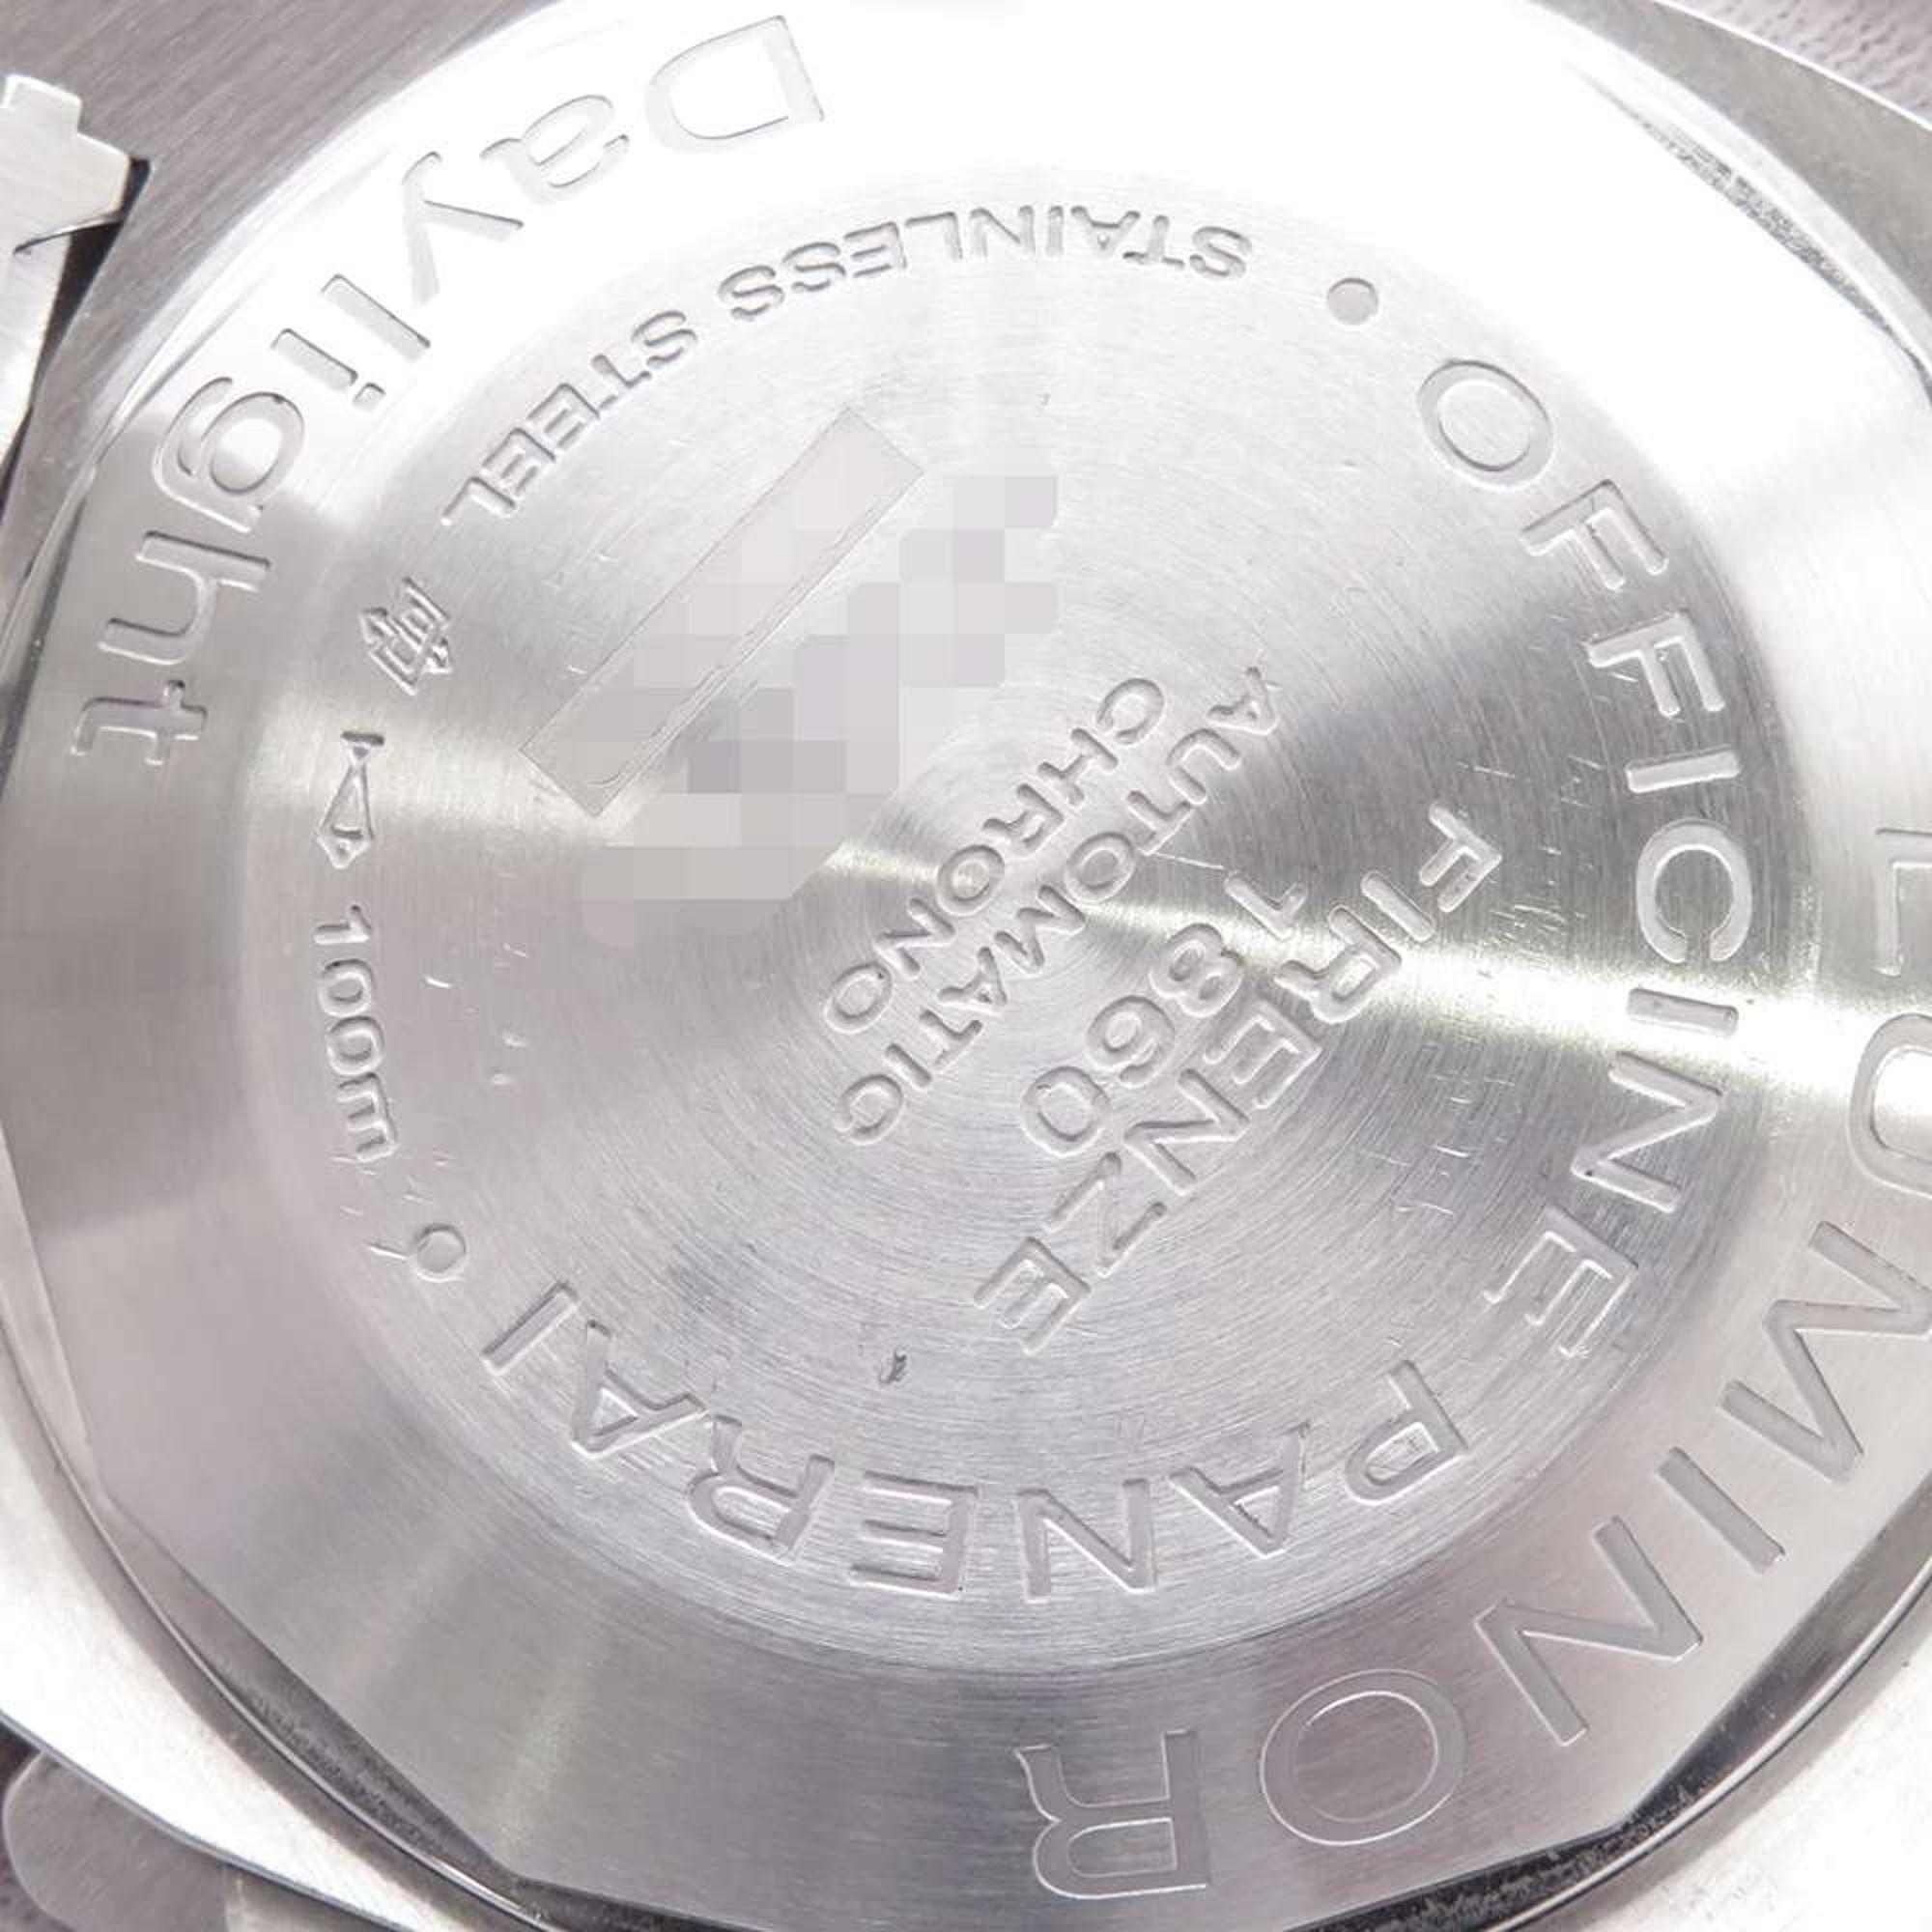 Panerai Black Stainless Steel Luminor PAM00236 Automatic Men's Wristwatch 44 Mm